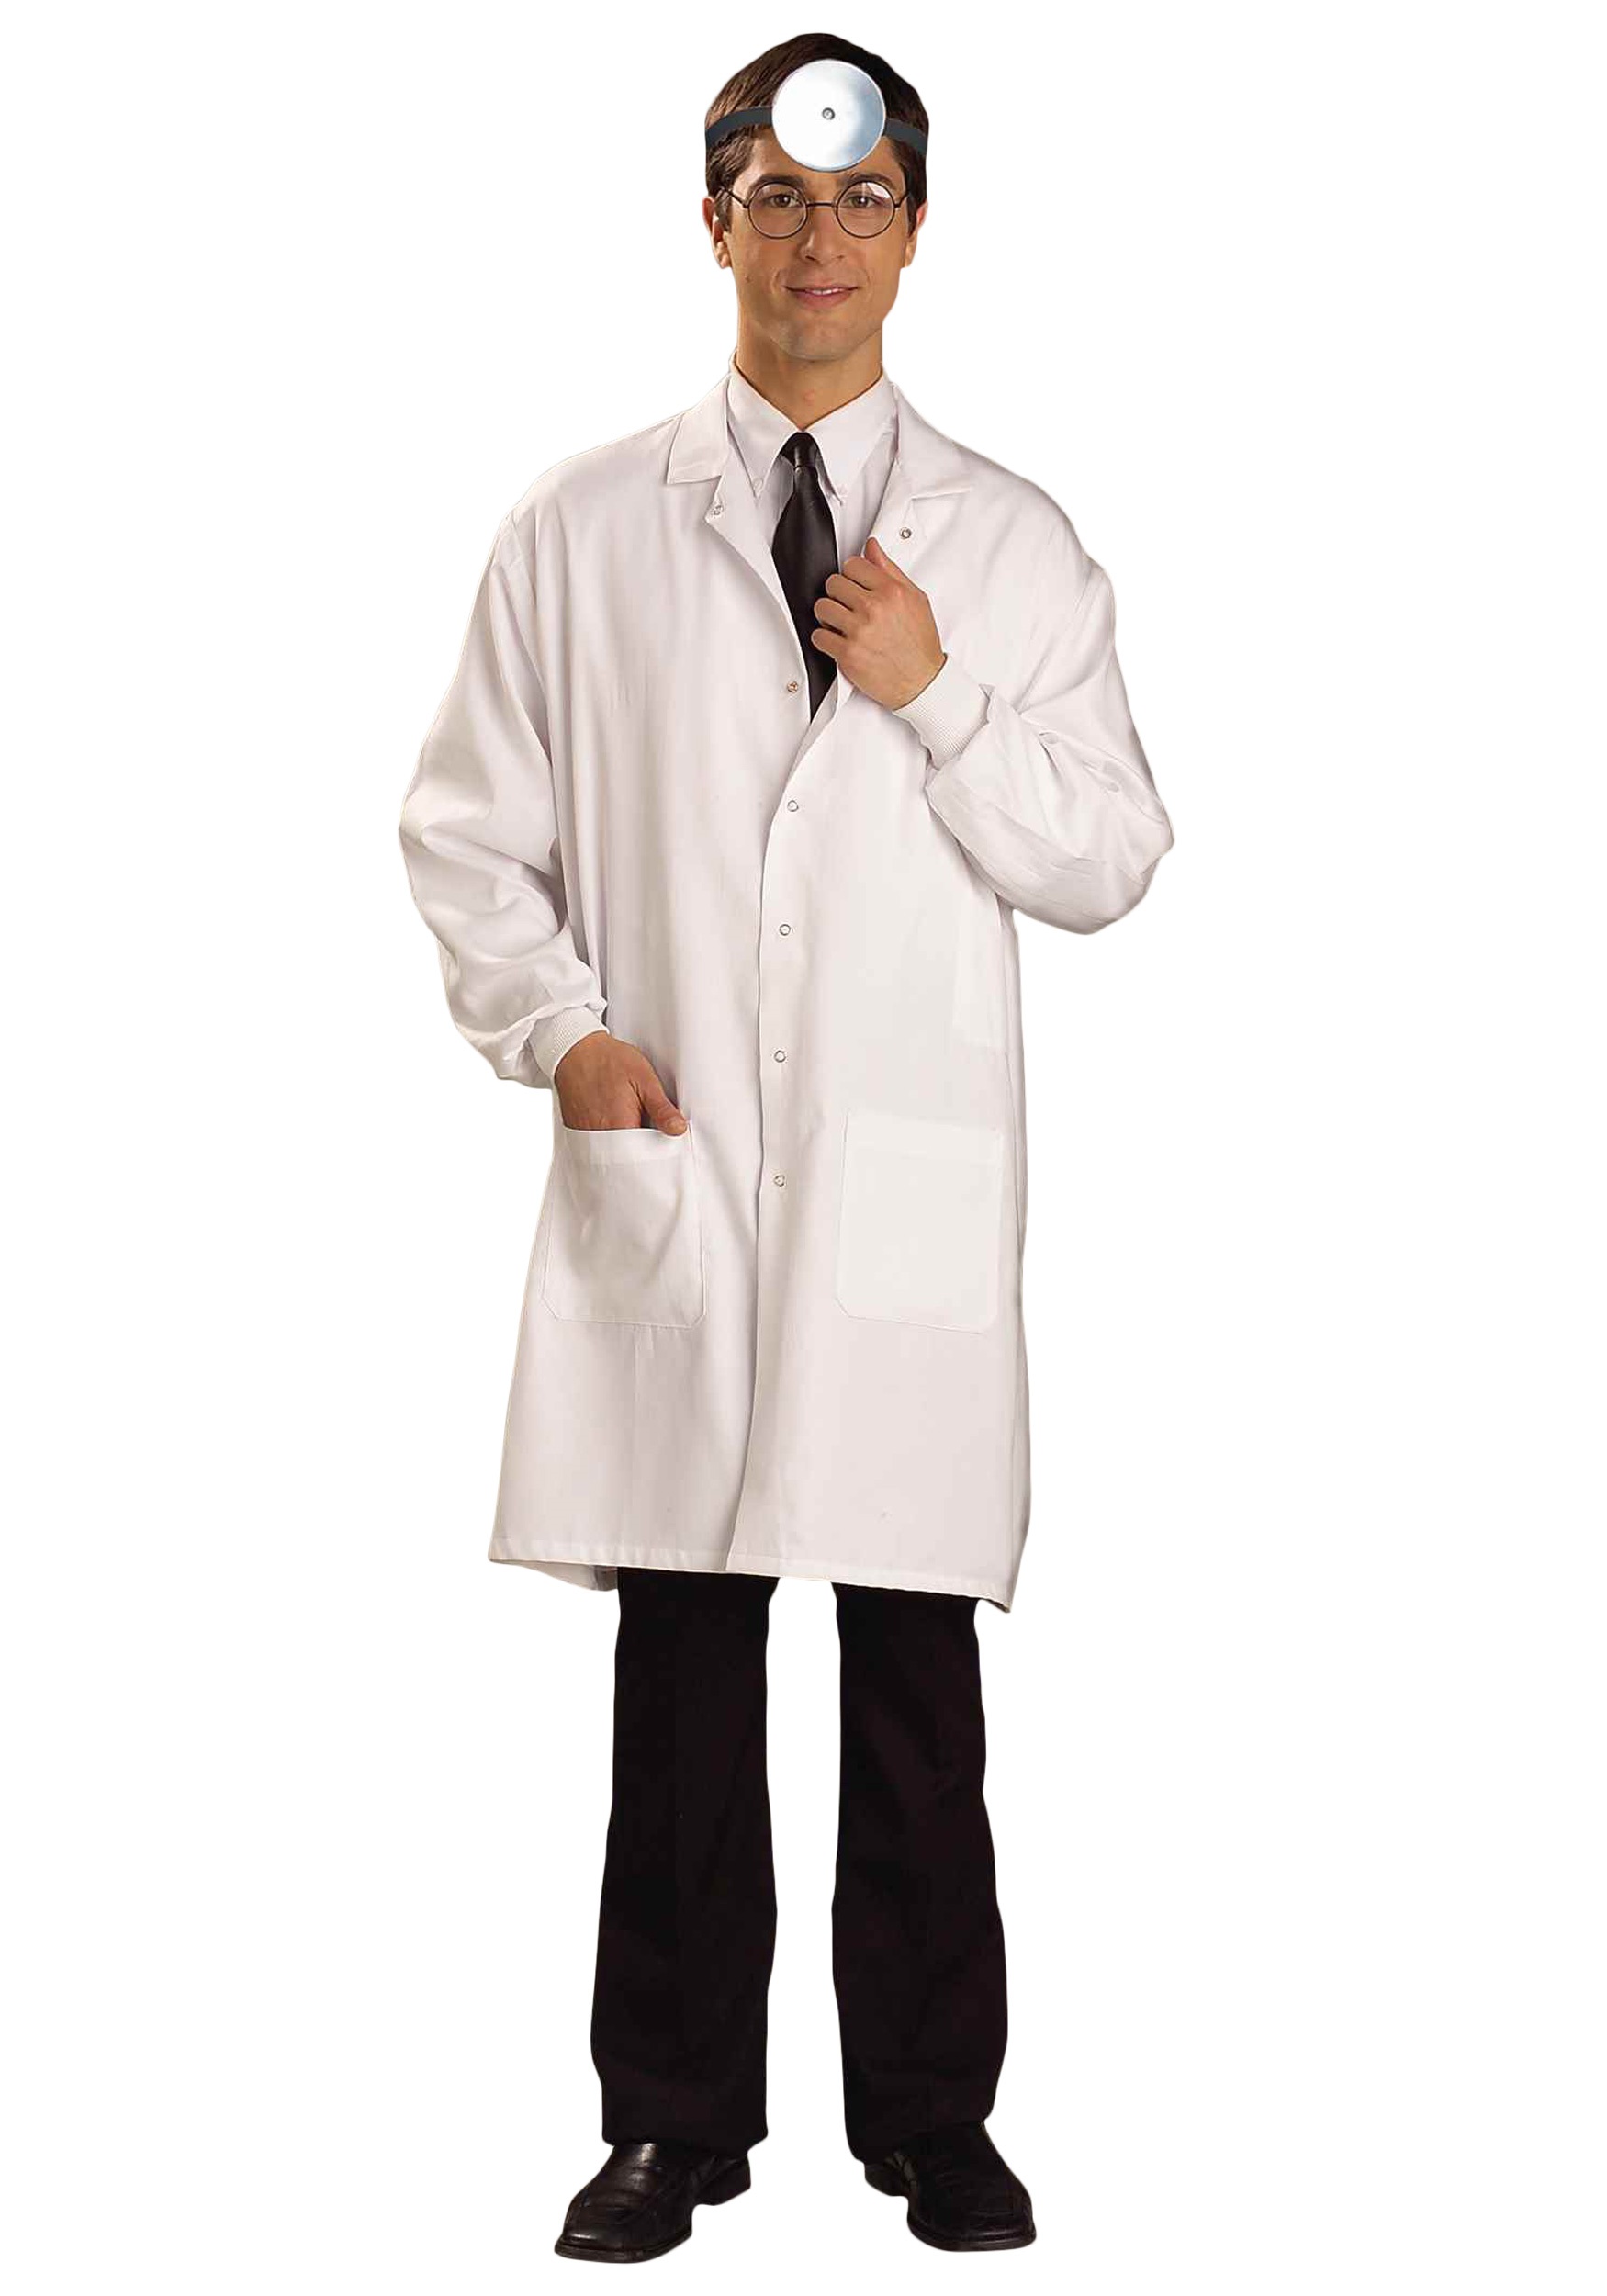 White Doctor Lab Coat Costume